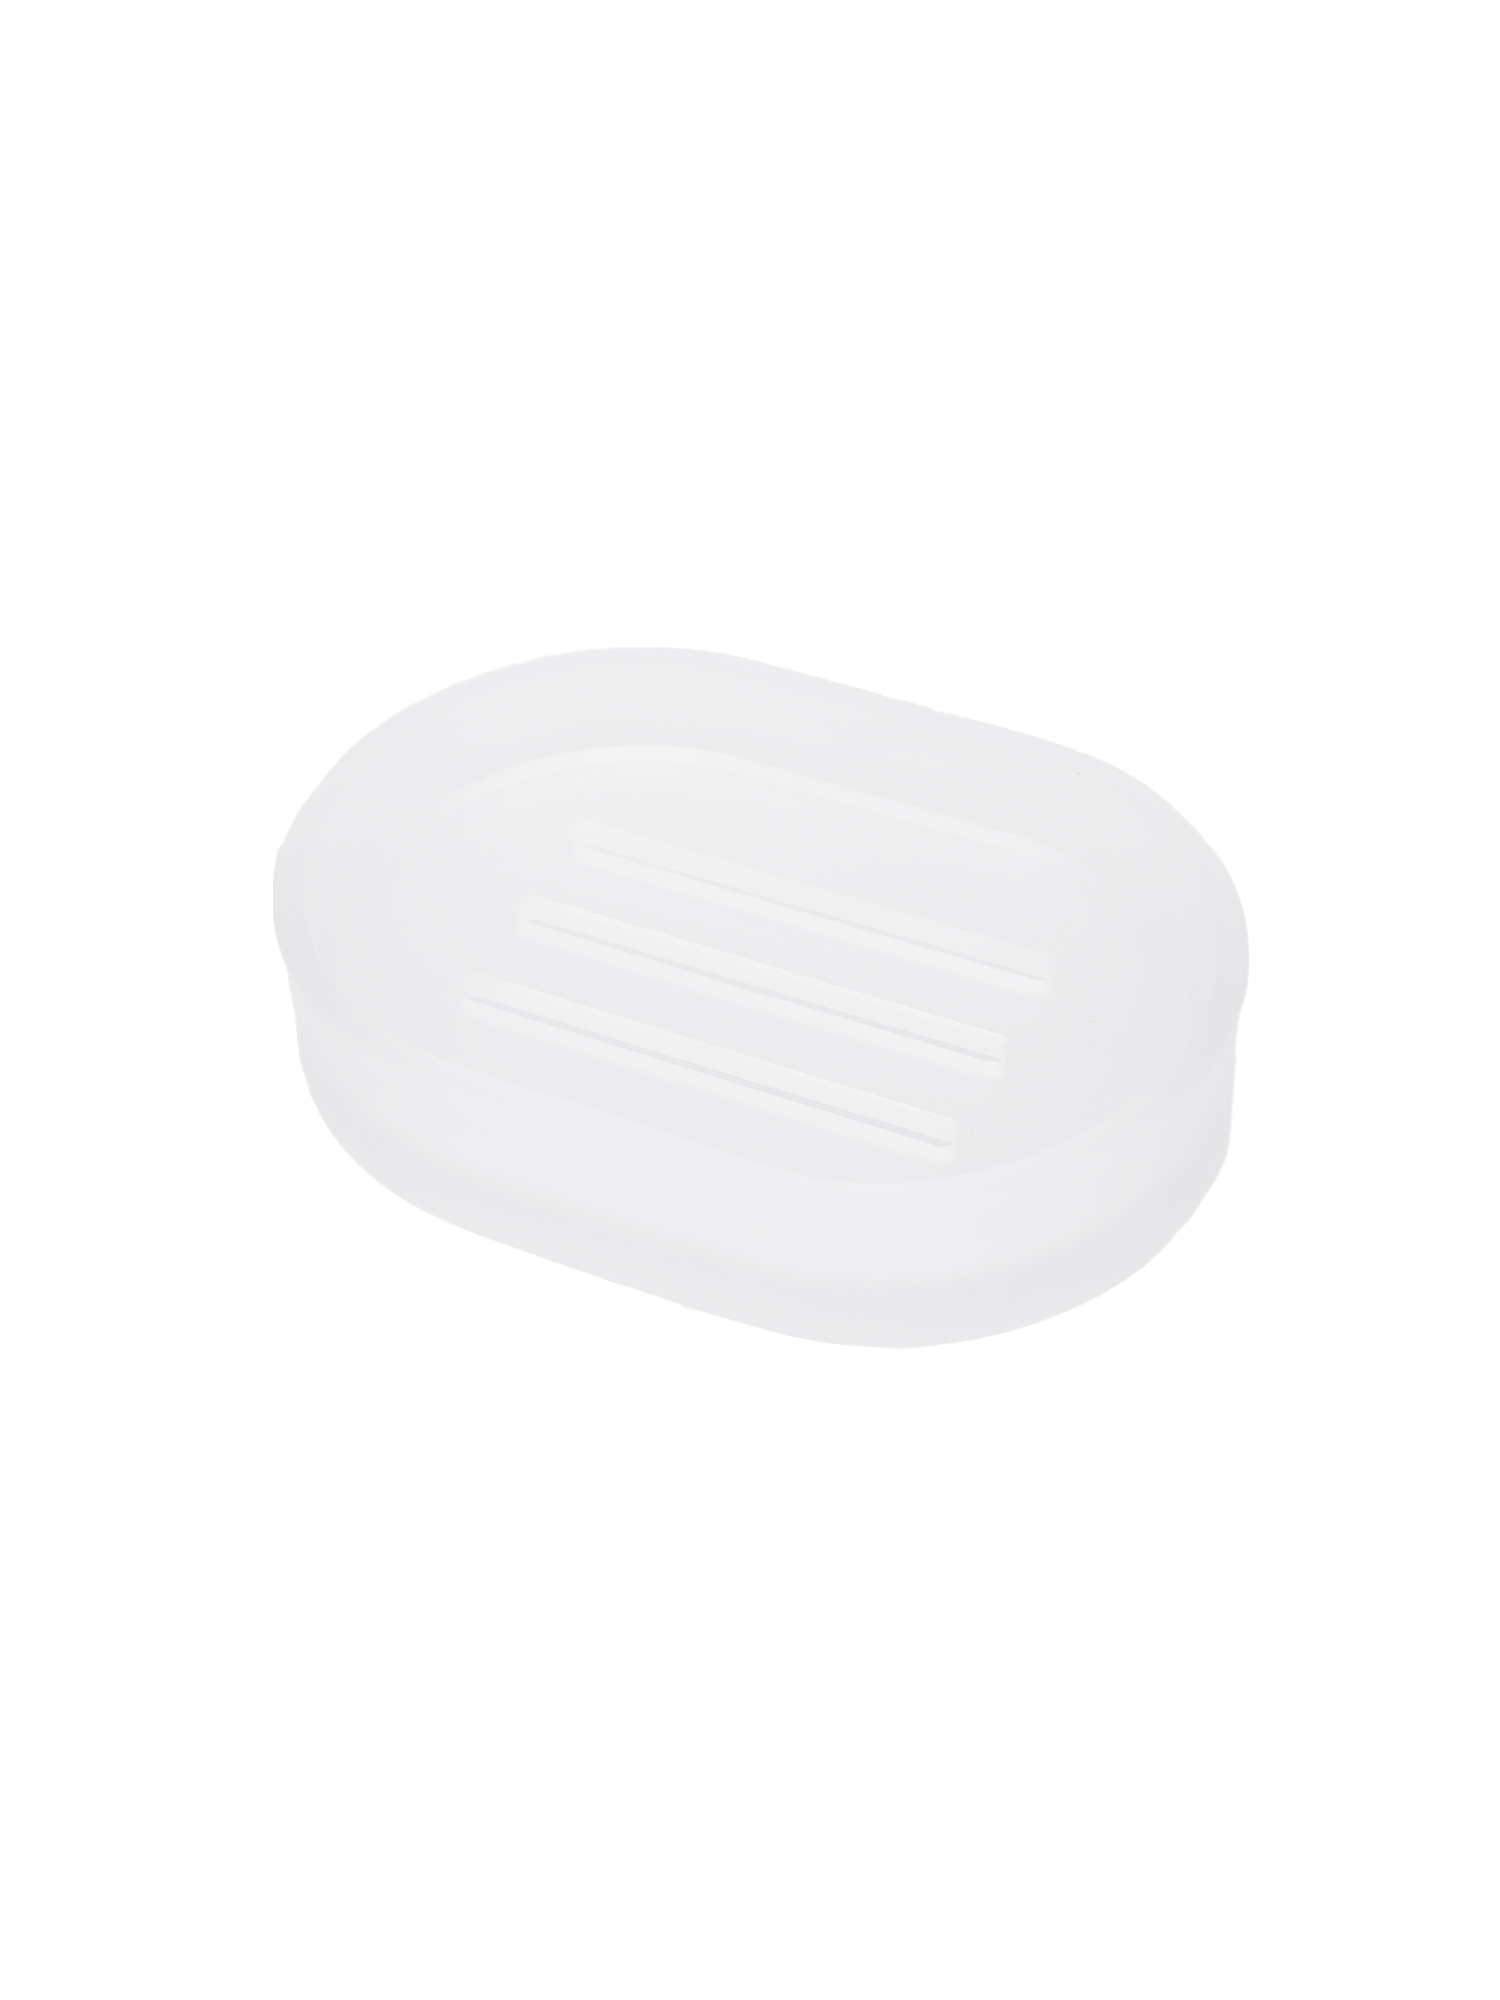 Let’s Binu Soap Dish Clear White